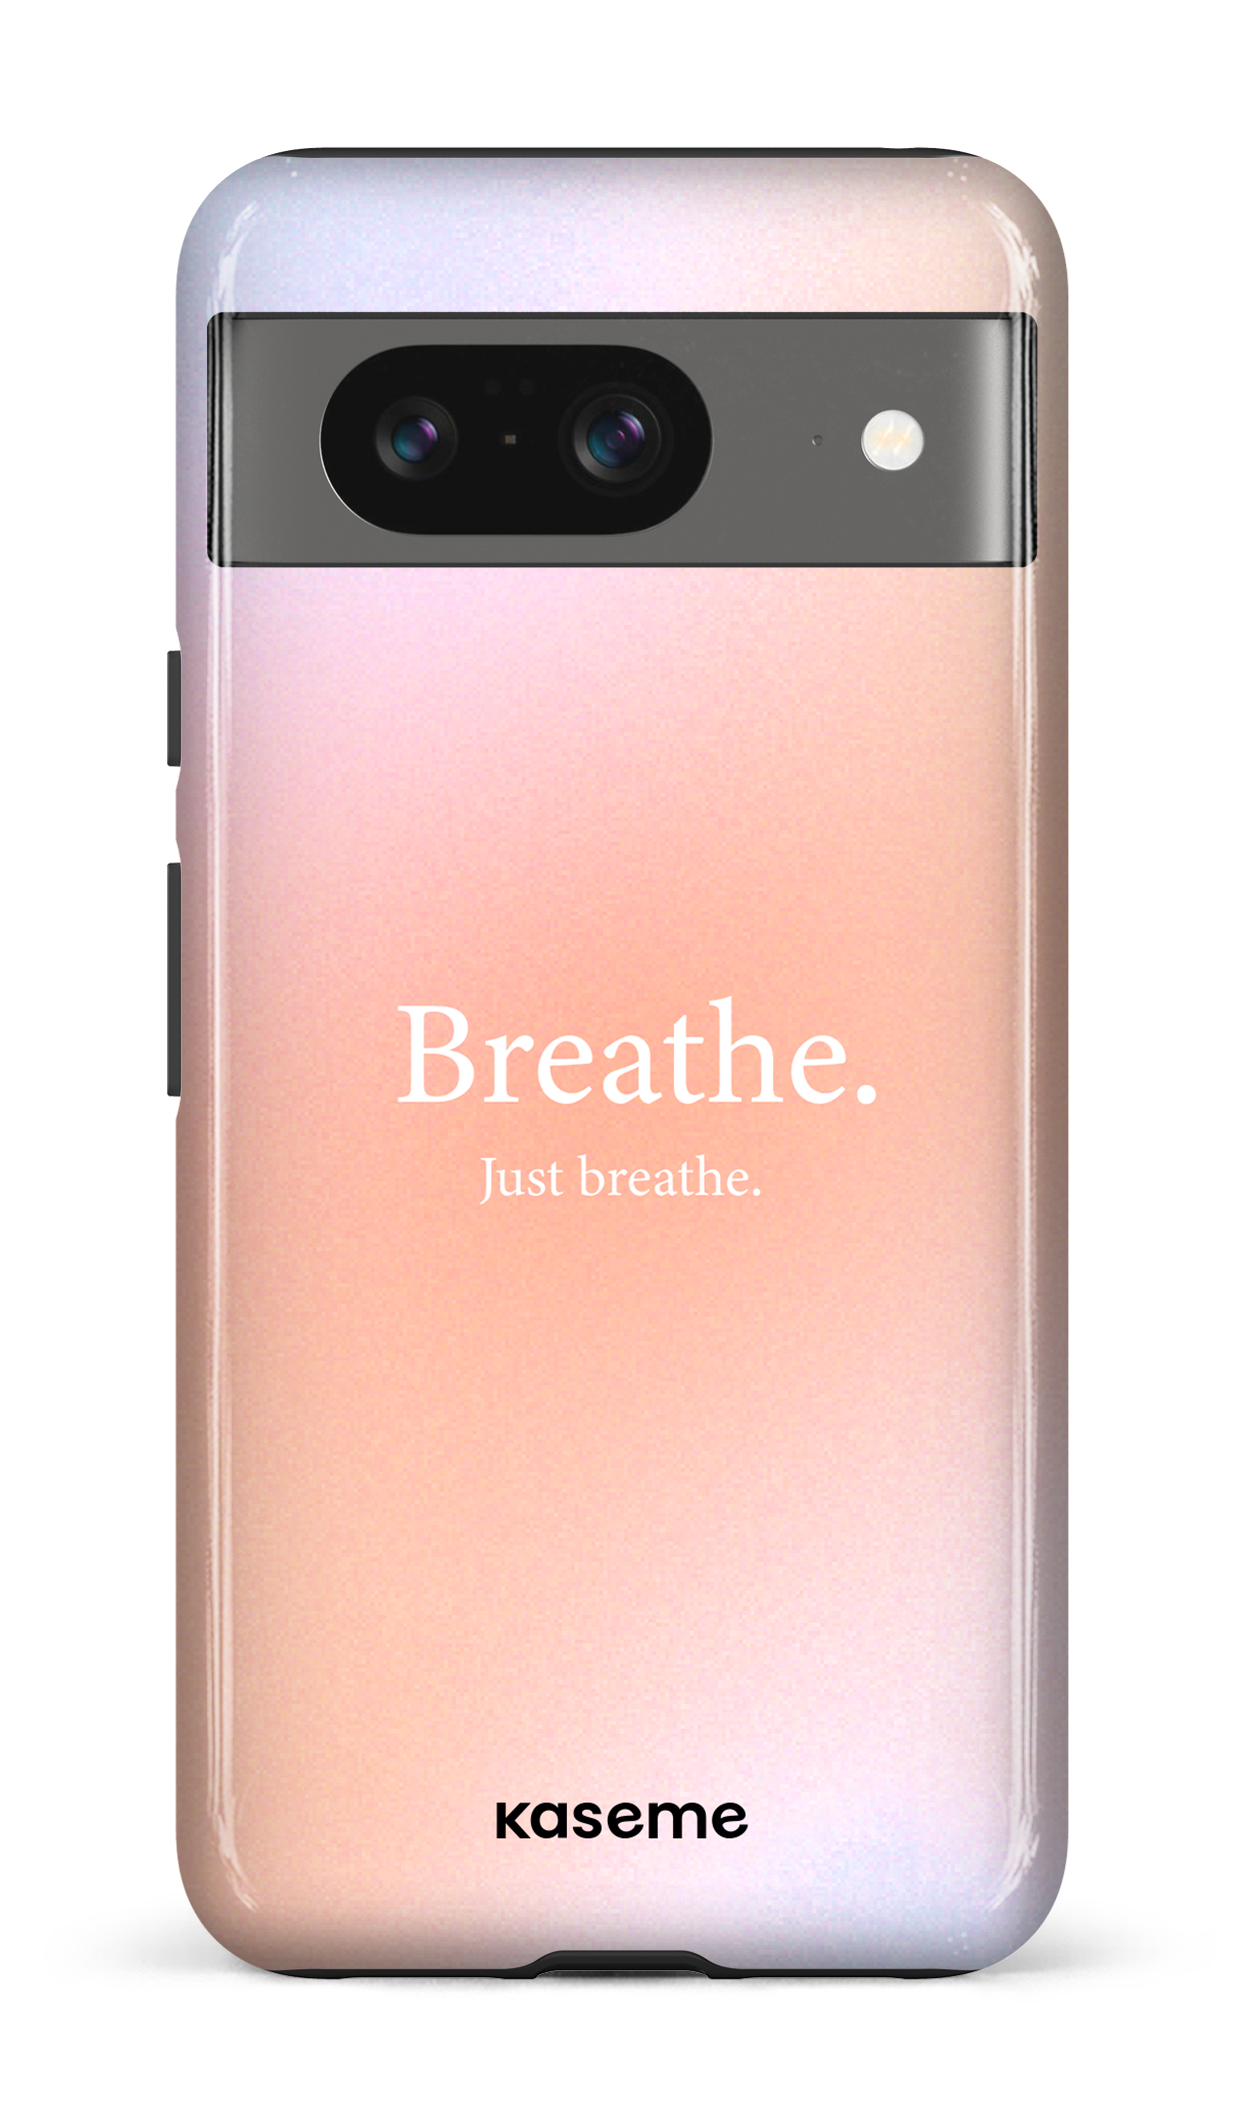 Just breathe - Google Pixel 8